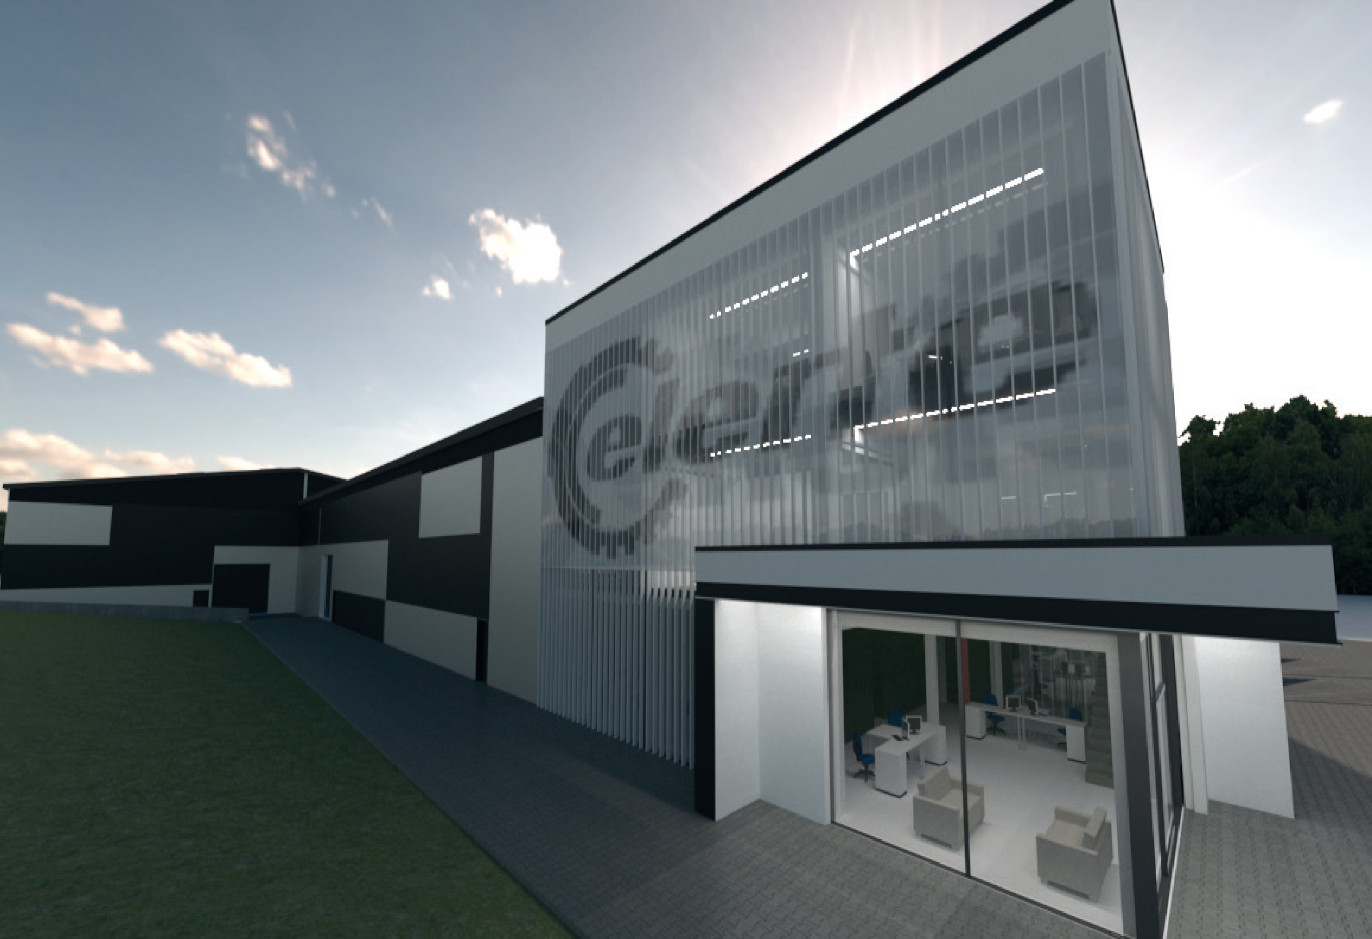 ELERTE New facility